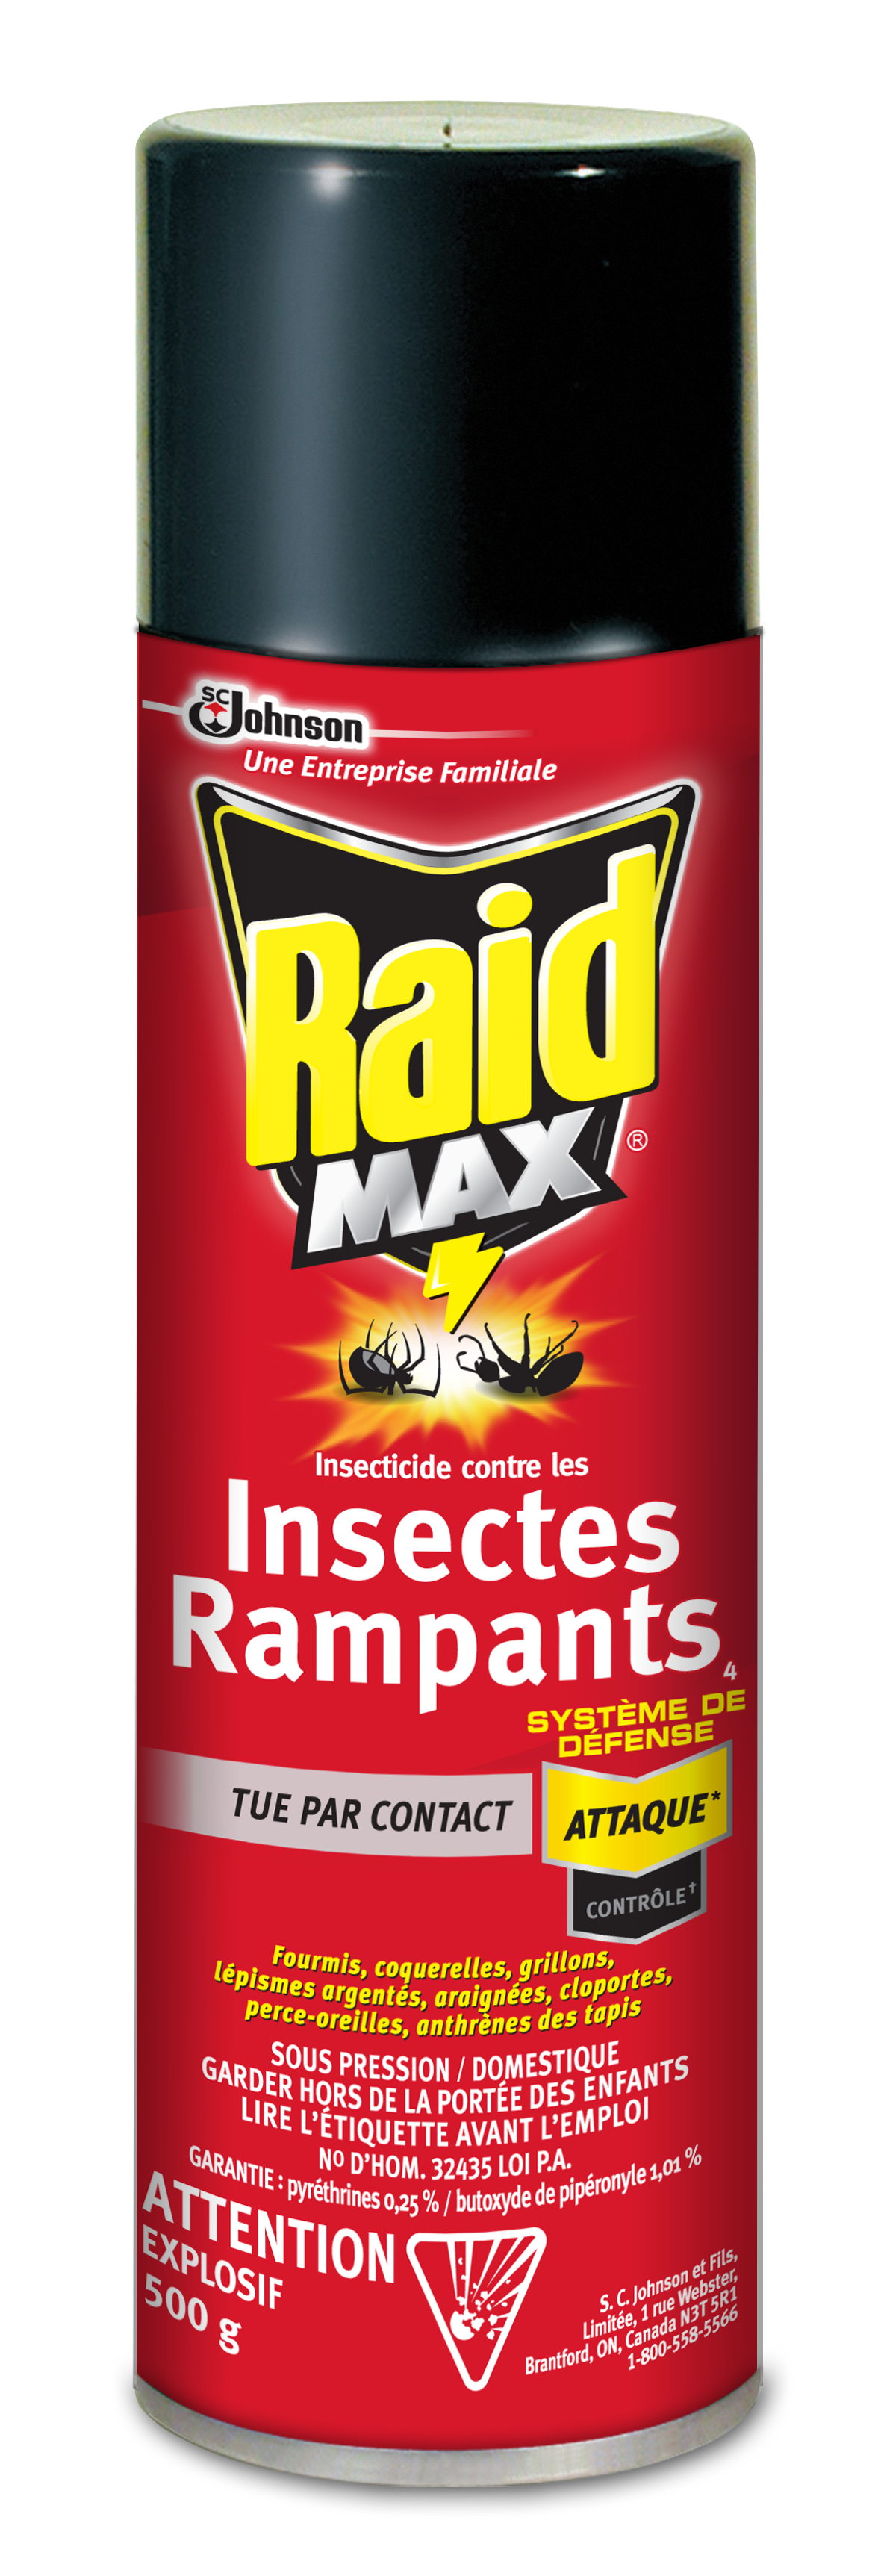 Assaut du raid à Saint-Denis Raid-max-crawling-insect-bug-killer